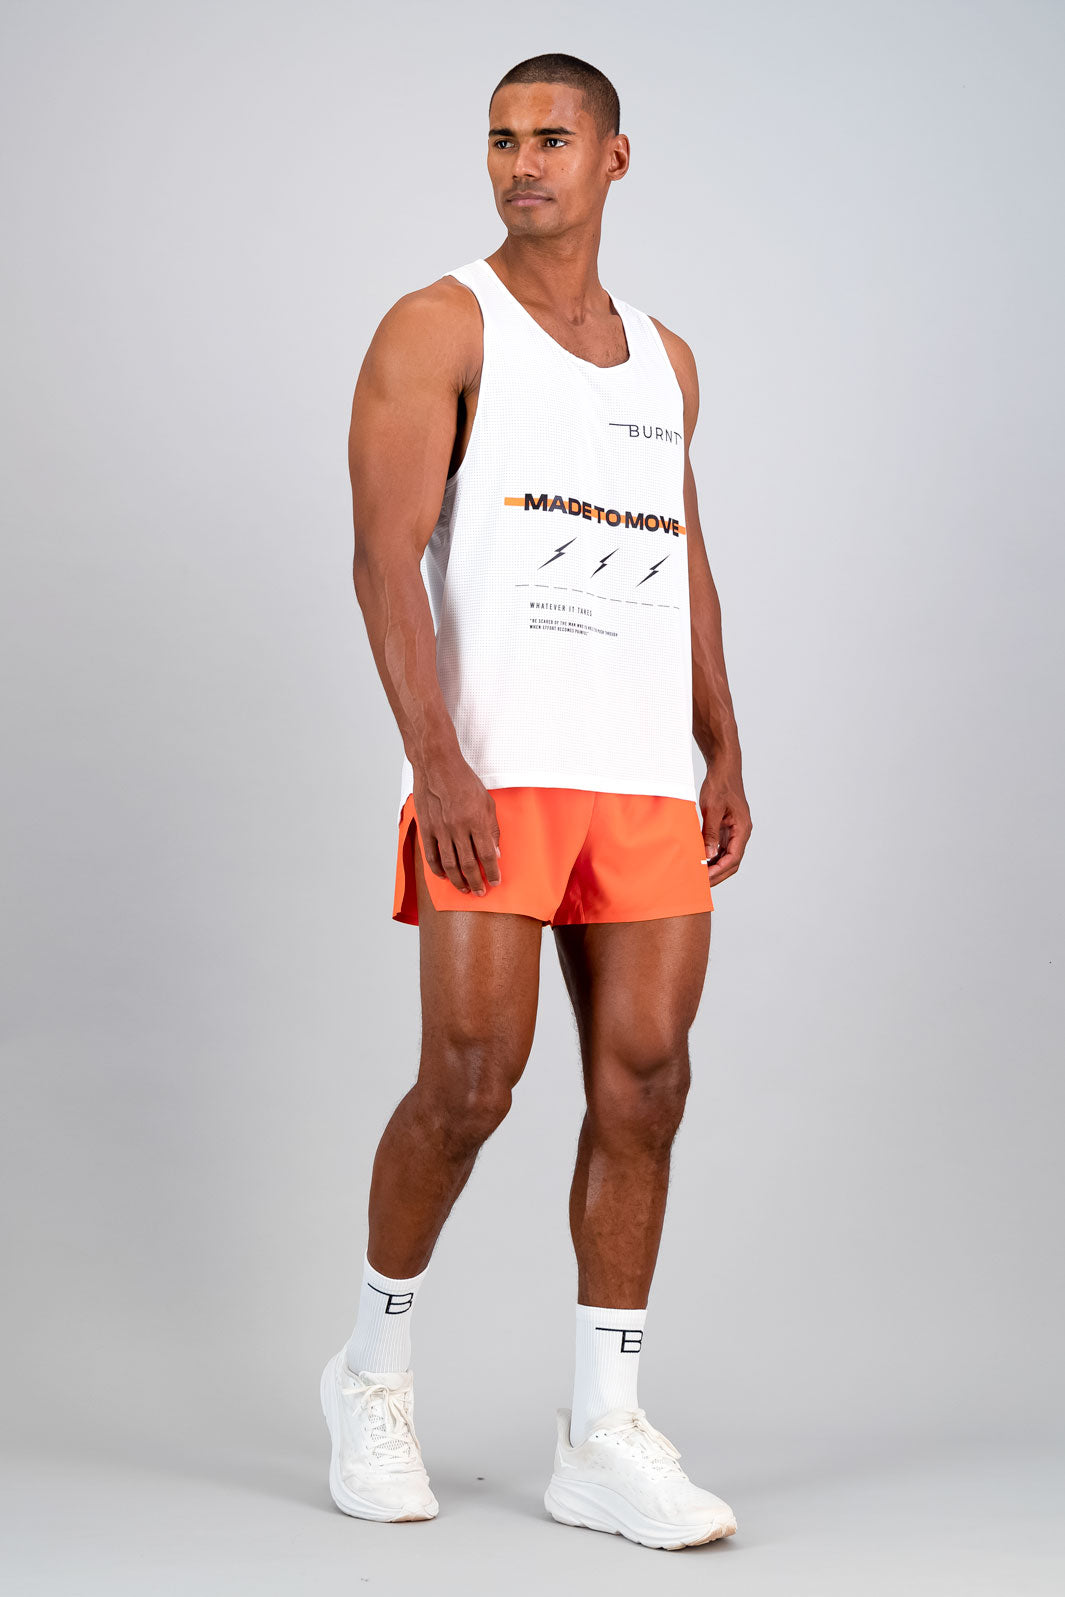 SpeedSkin™ Mens Pro Shorts - Orange